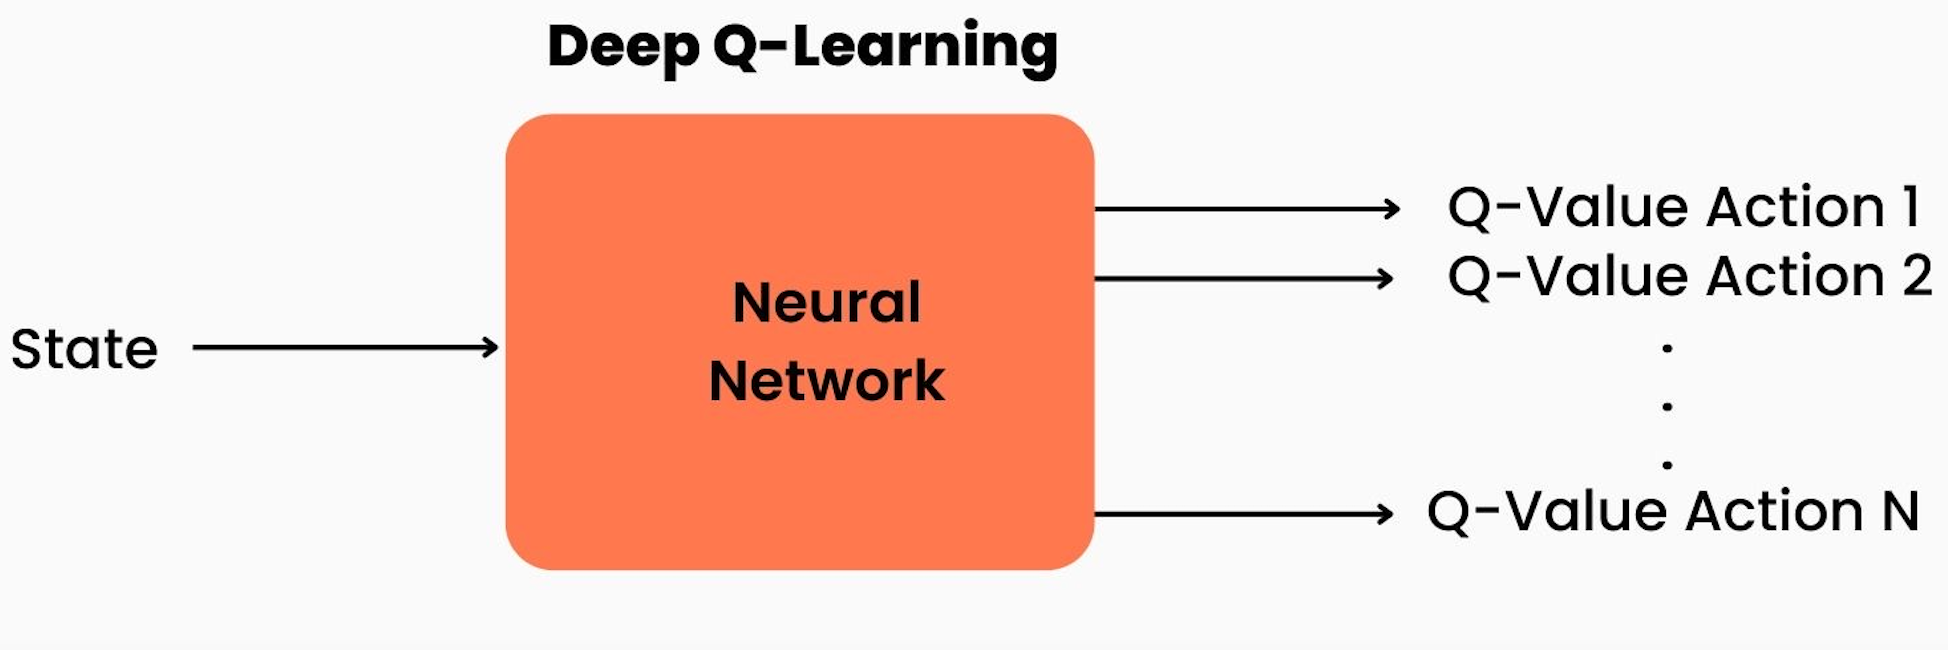 Deep Q-Learning